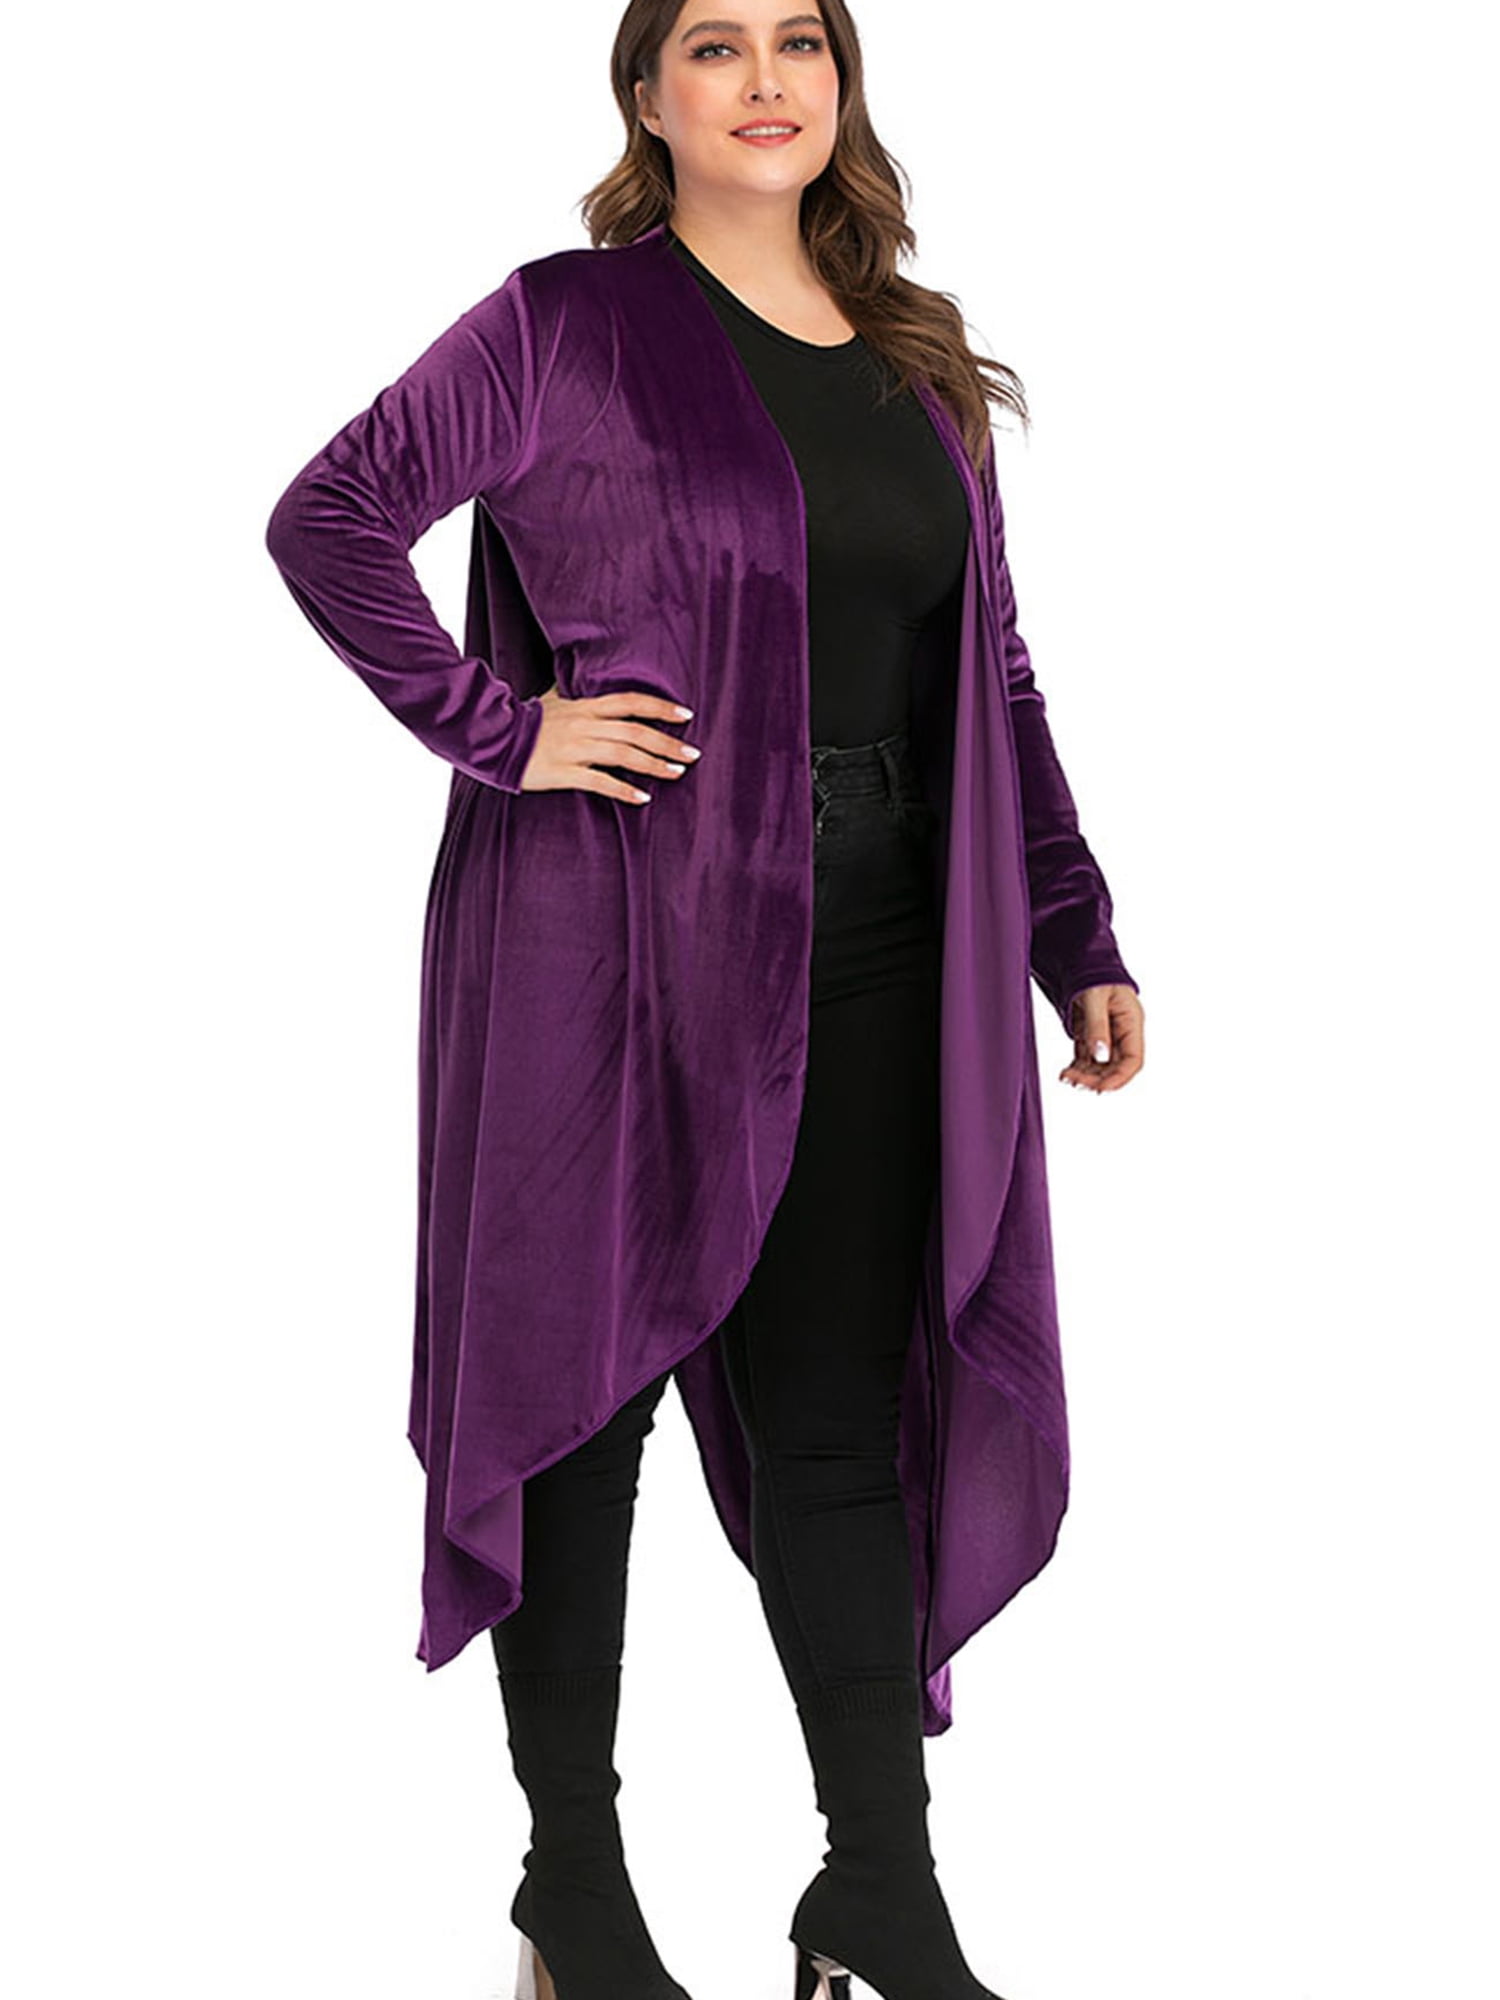 ZHRUI Womens Plus Size Casual Half Sleeve Lightweight Cardigan Coat Color : Black, Size : 3X 